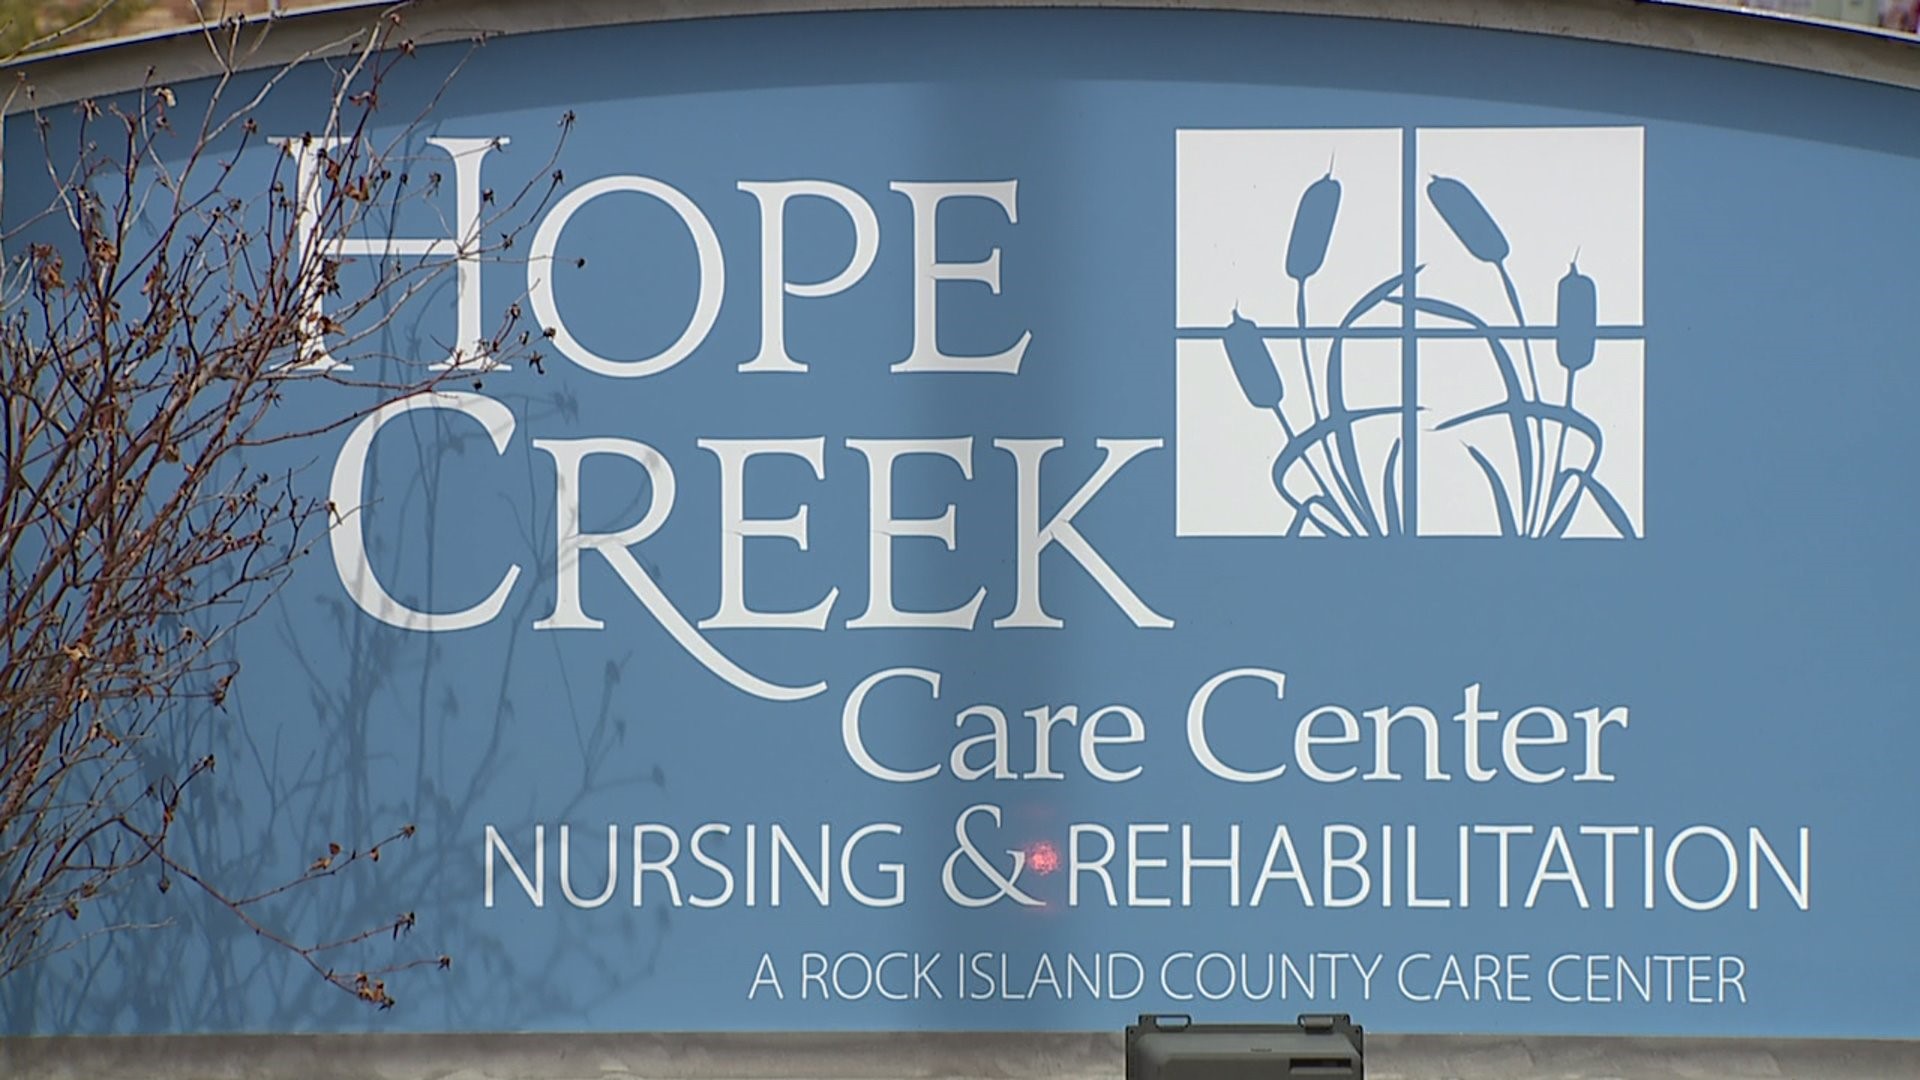 Hope Creek Care Center borrows to battle debt to more than 50 vendors